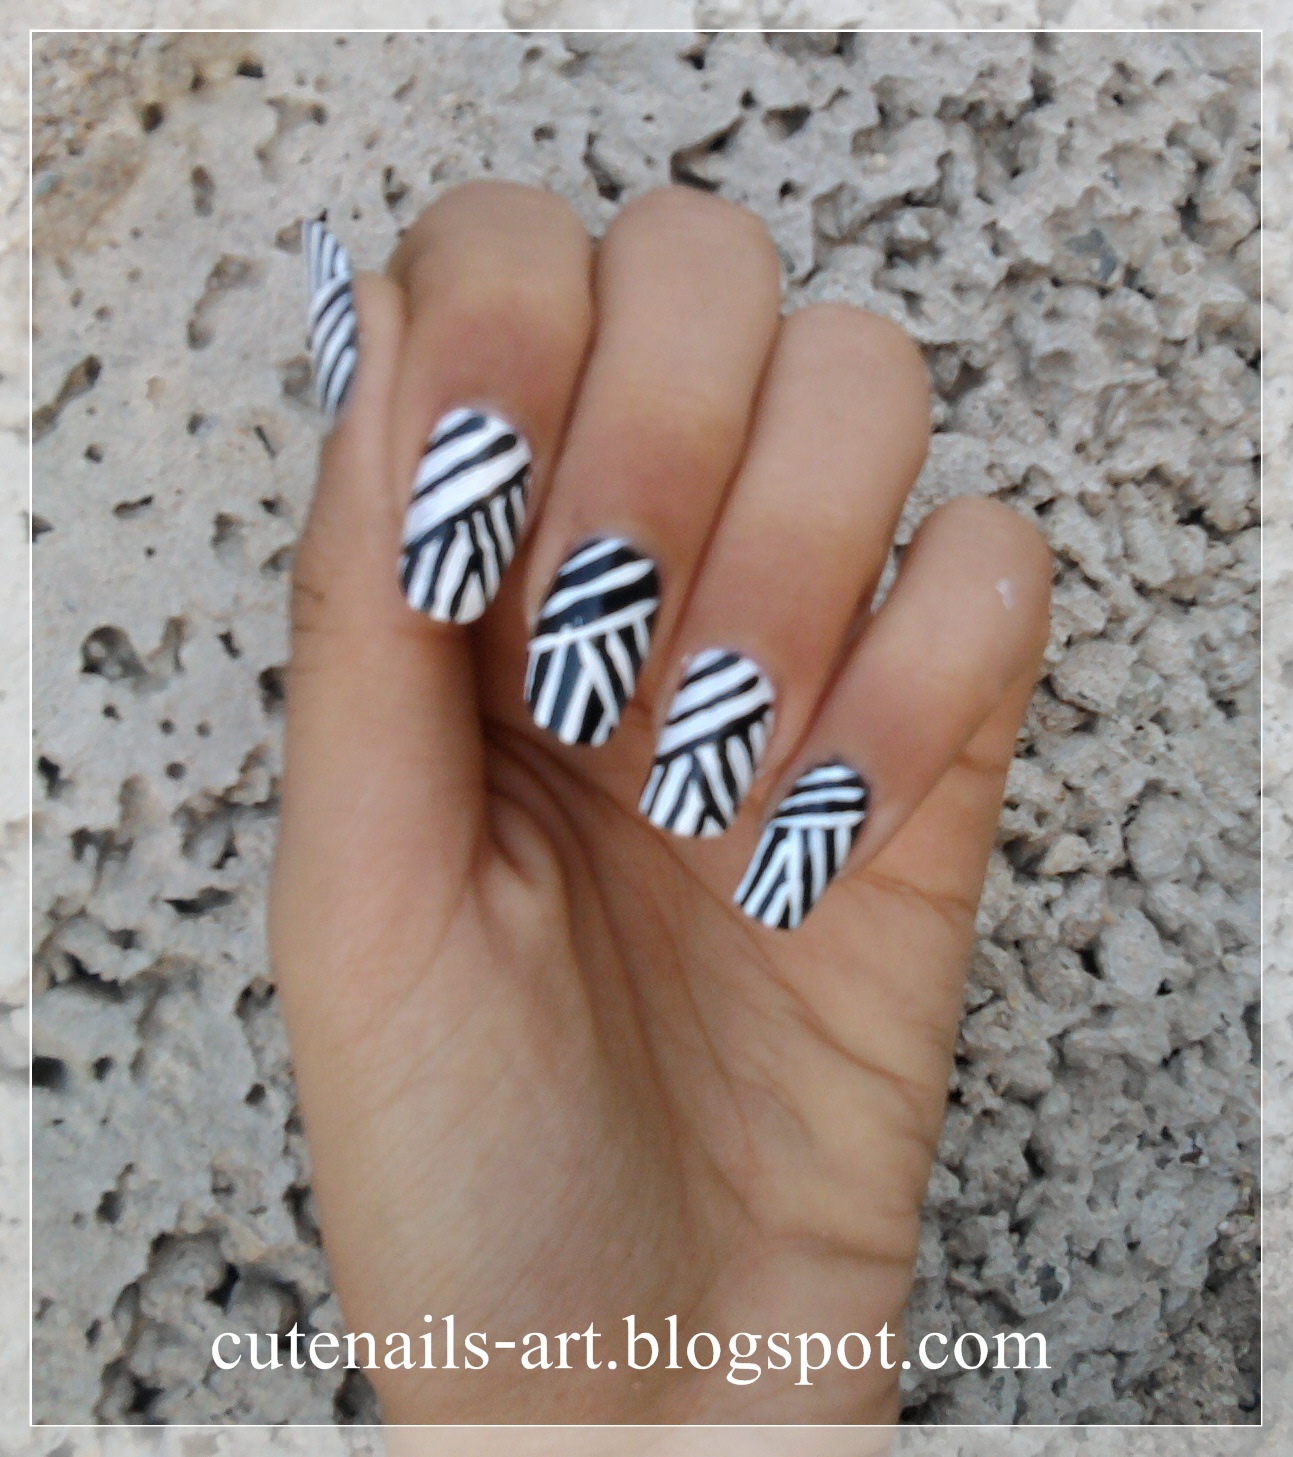 cutenailsart: weaving lines nail art design/black and white